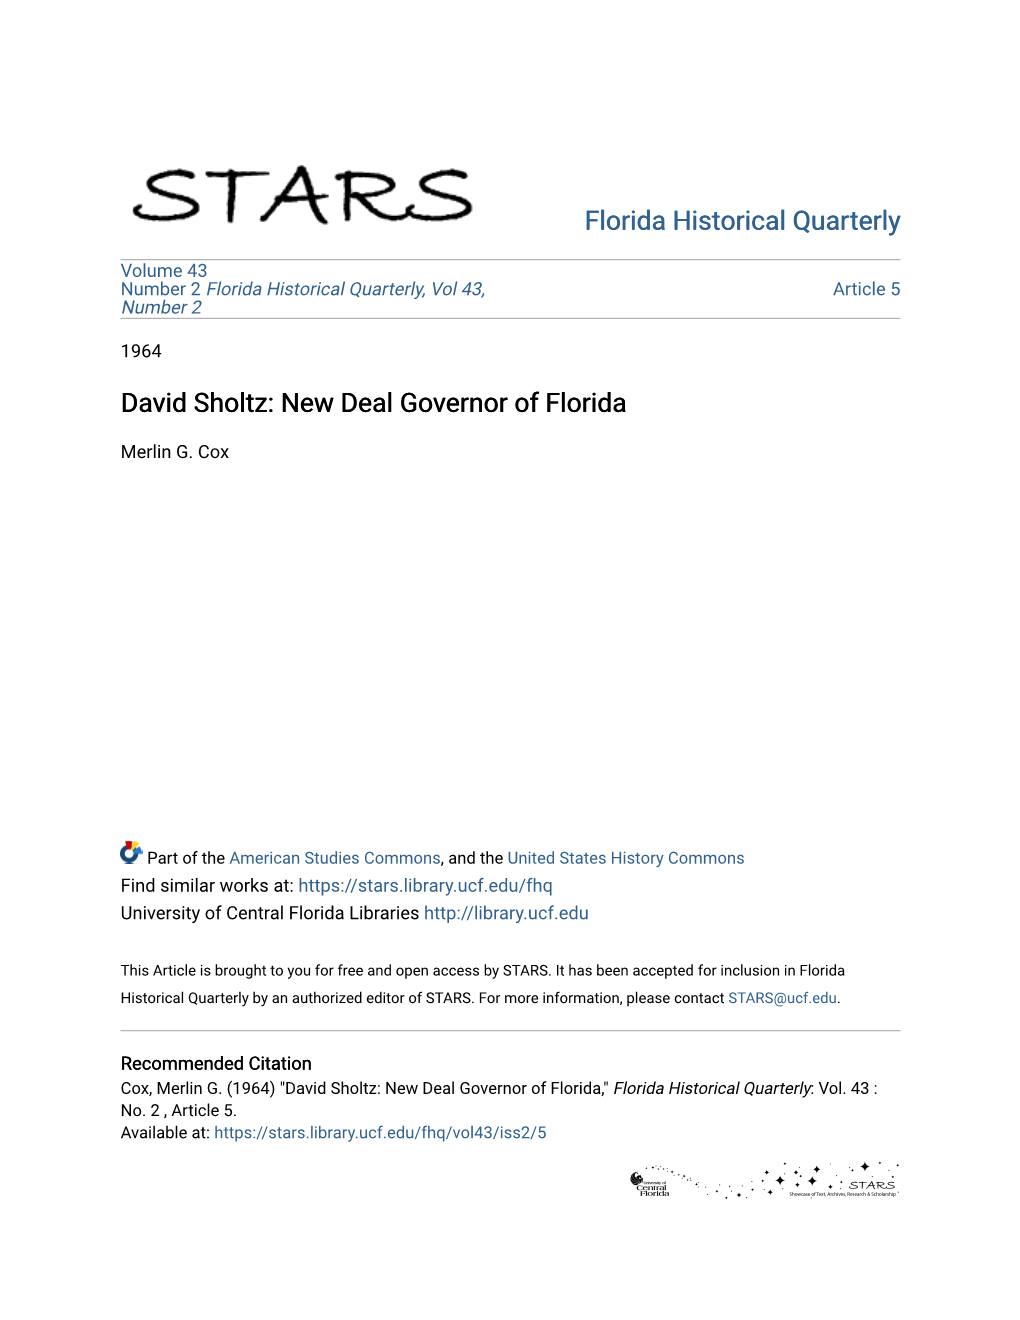 David Sholtz: New Deal Governor of Florida